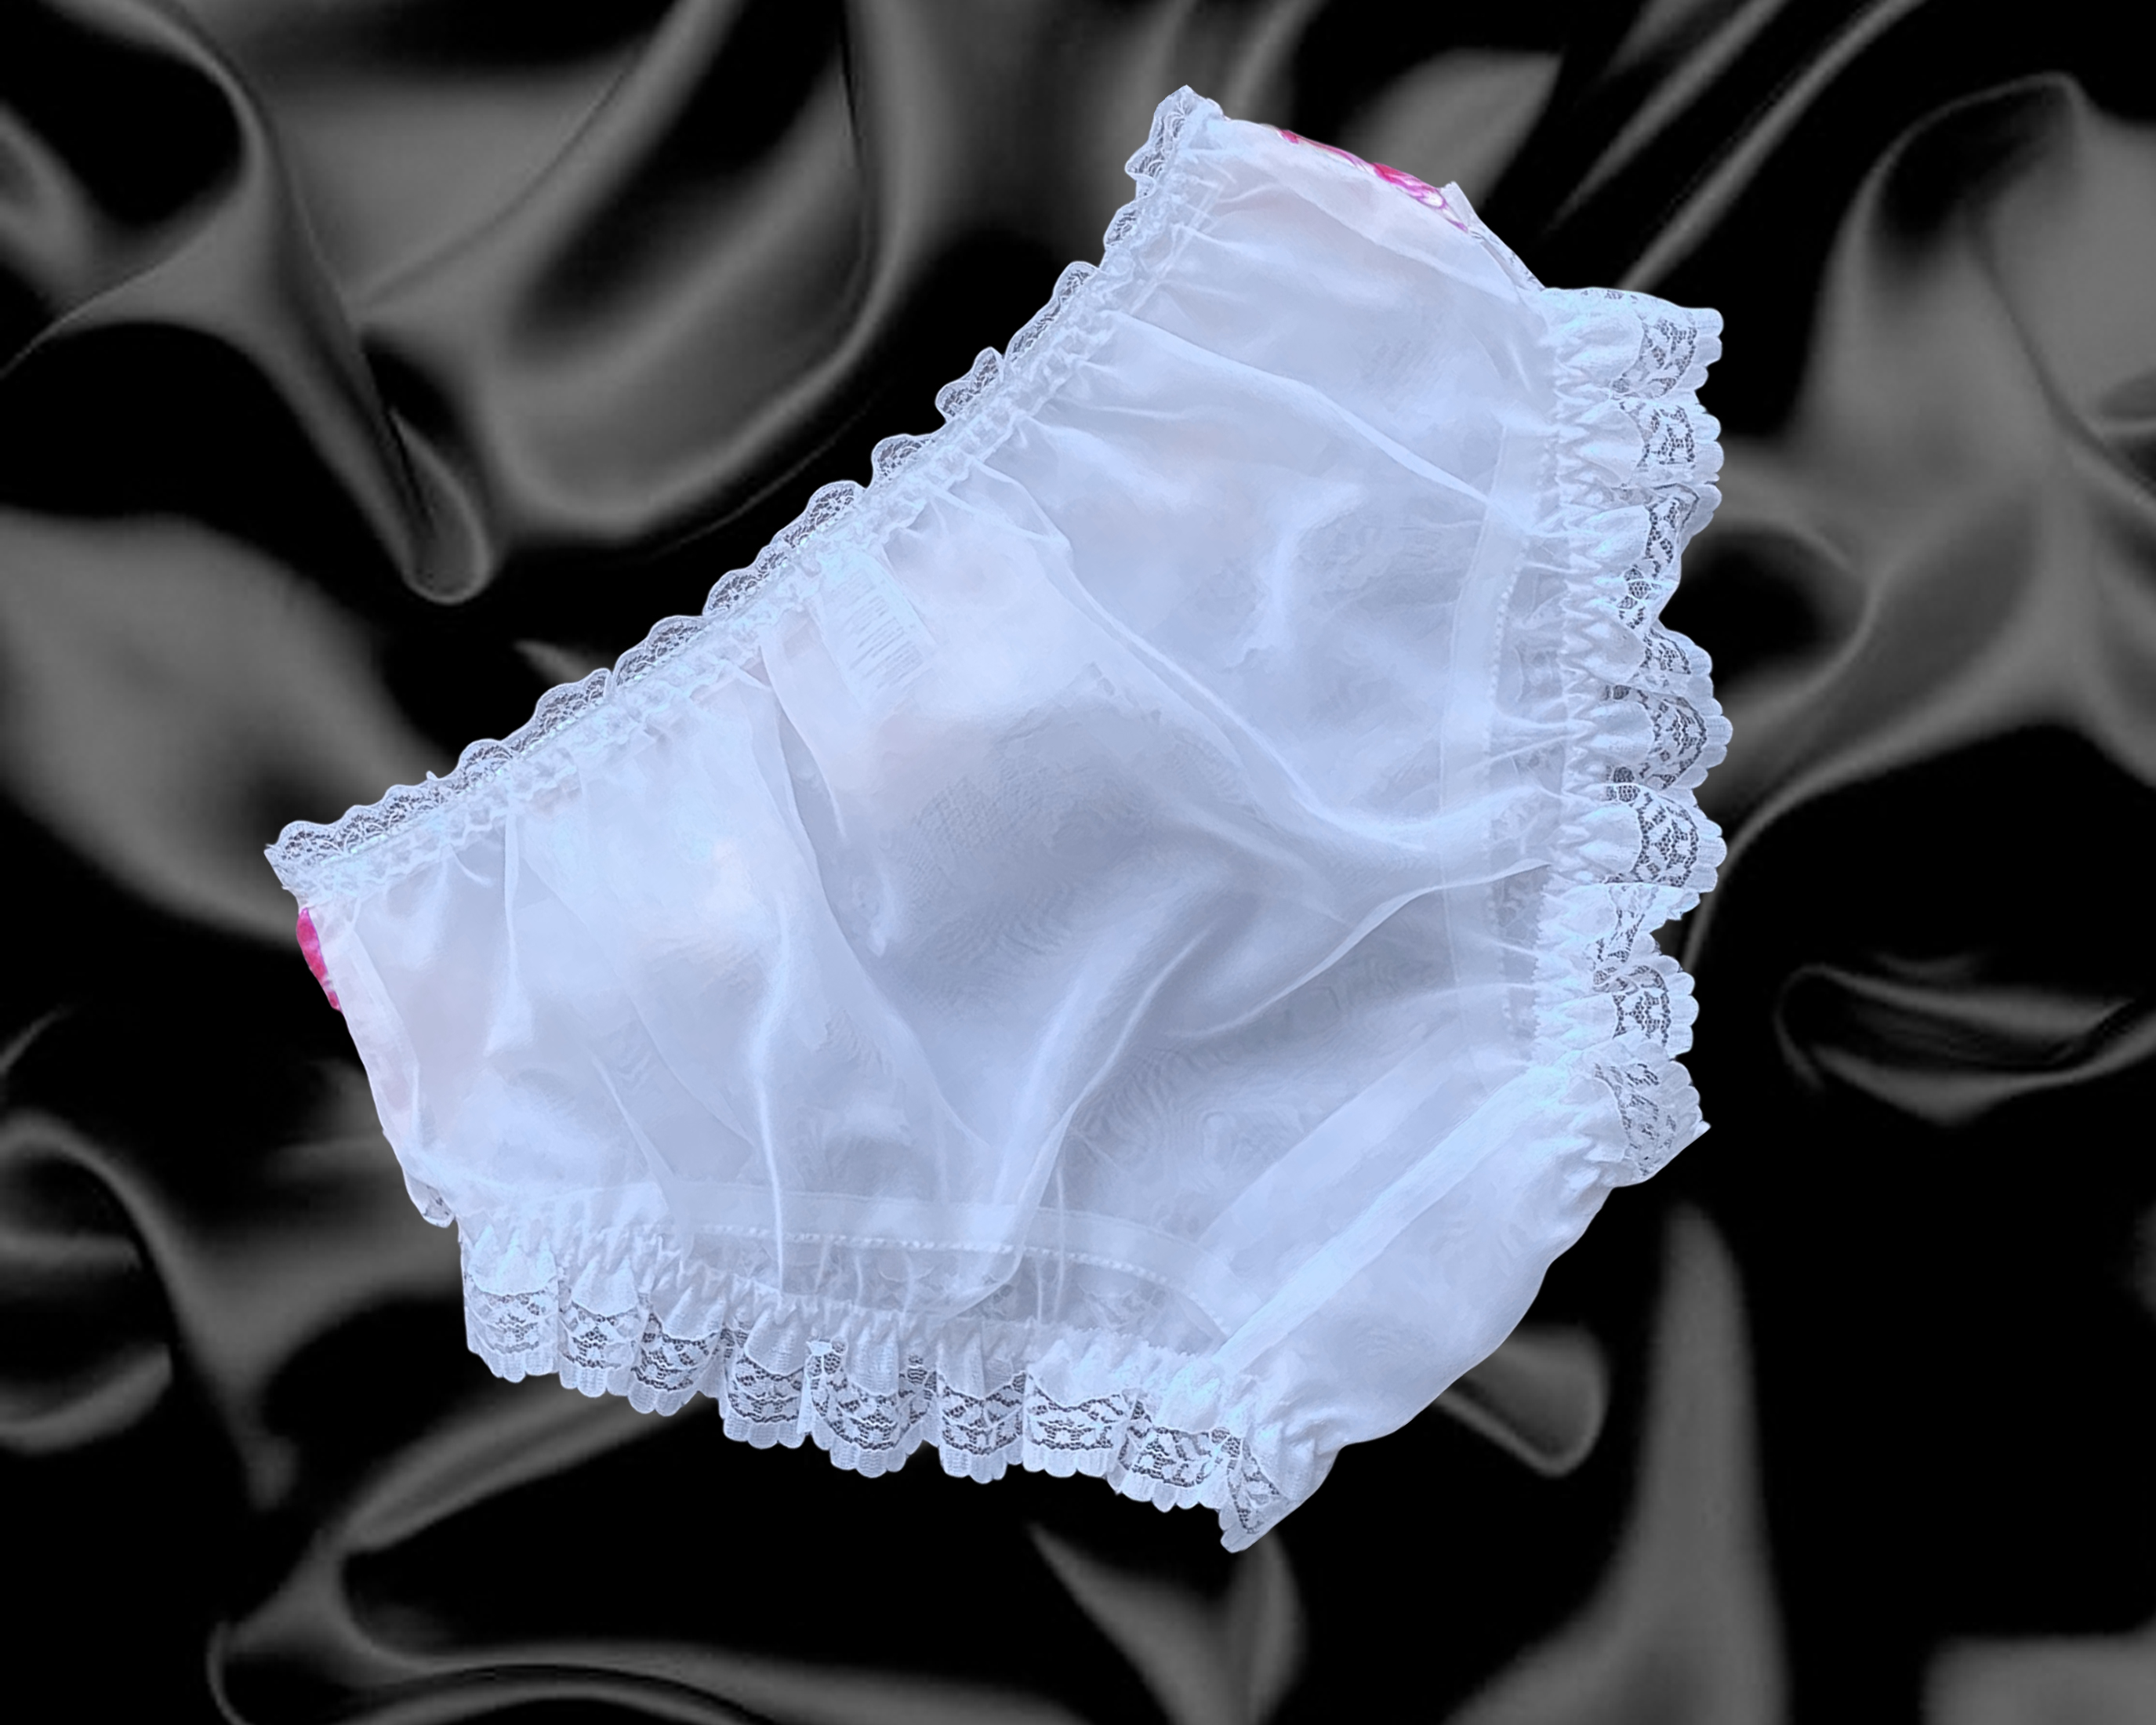 White Nylon Frilly Sissy Sheer Satin Full Cut Brief Panties Knickers Size 10 20 Ebay